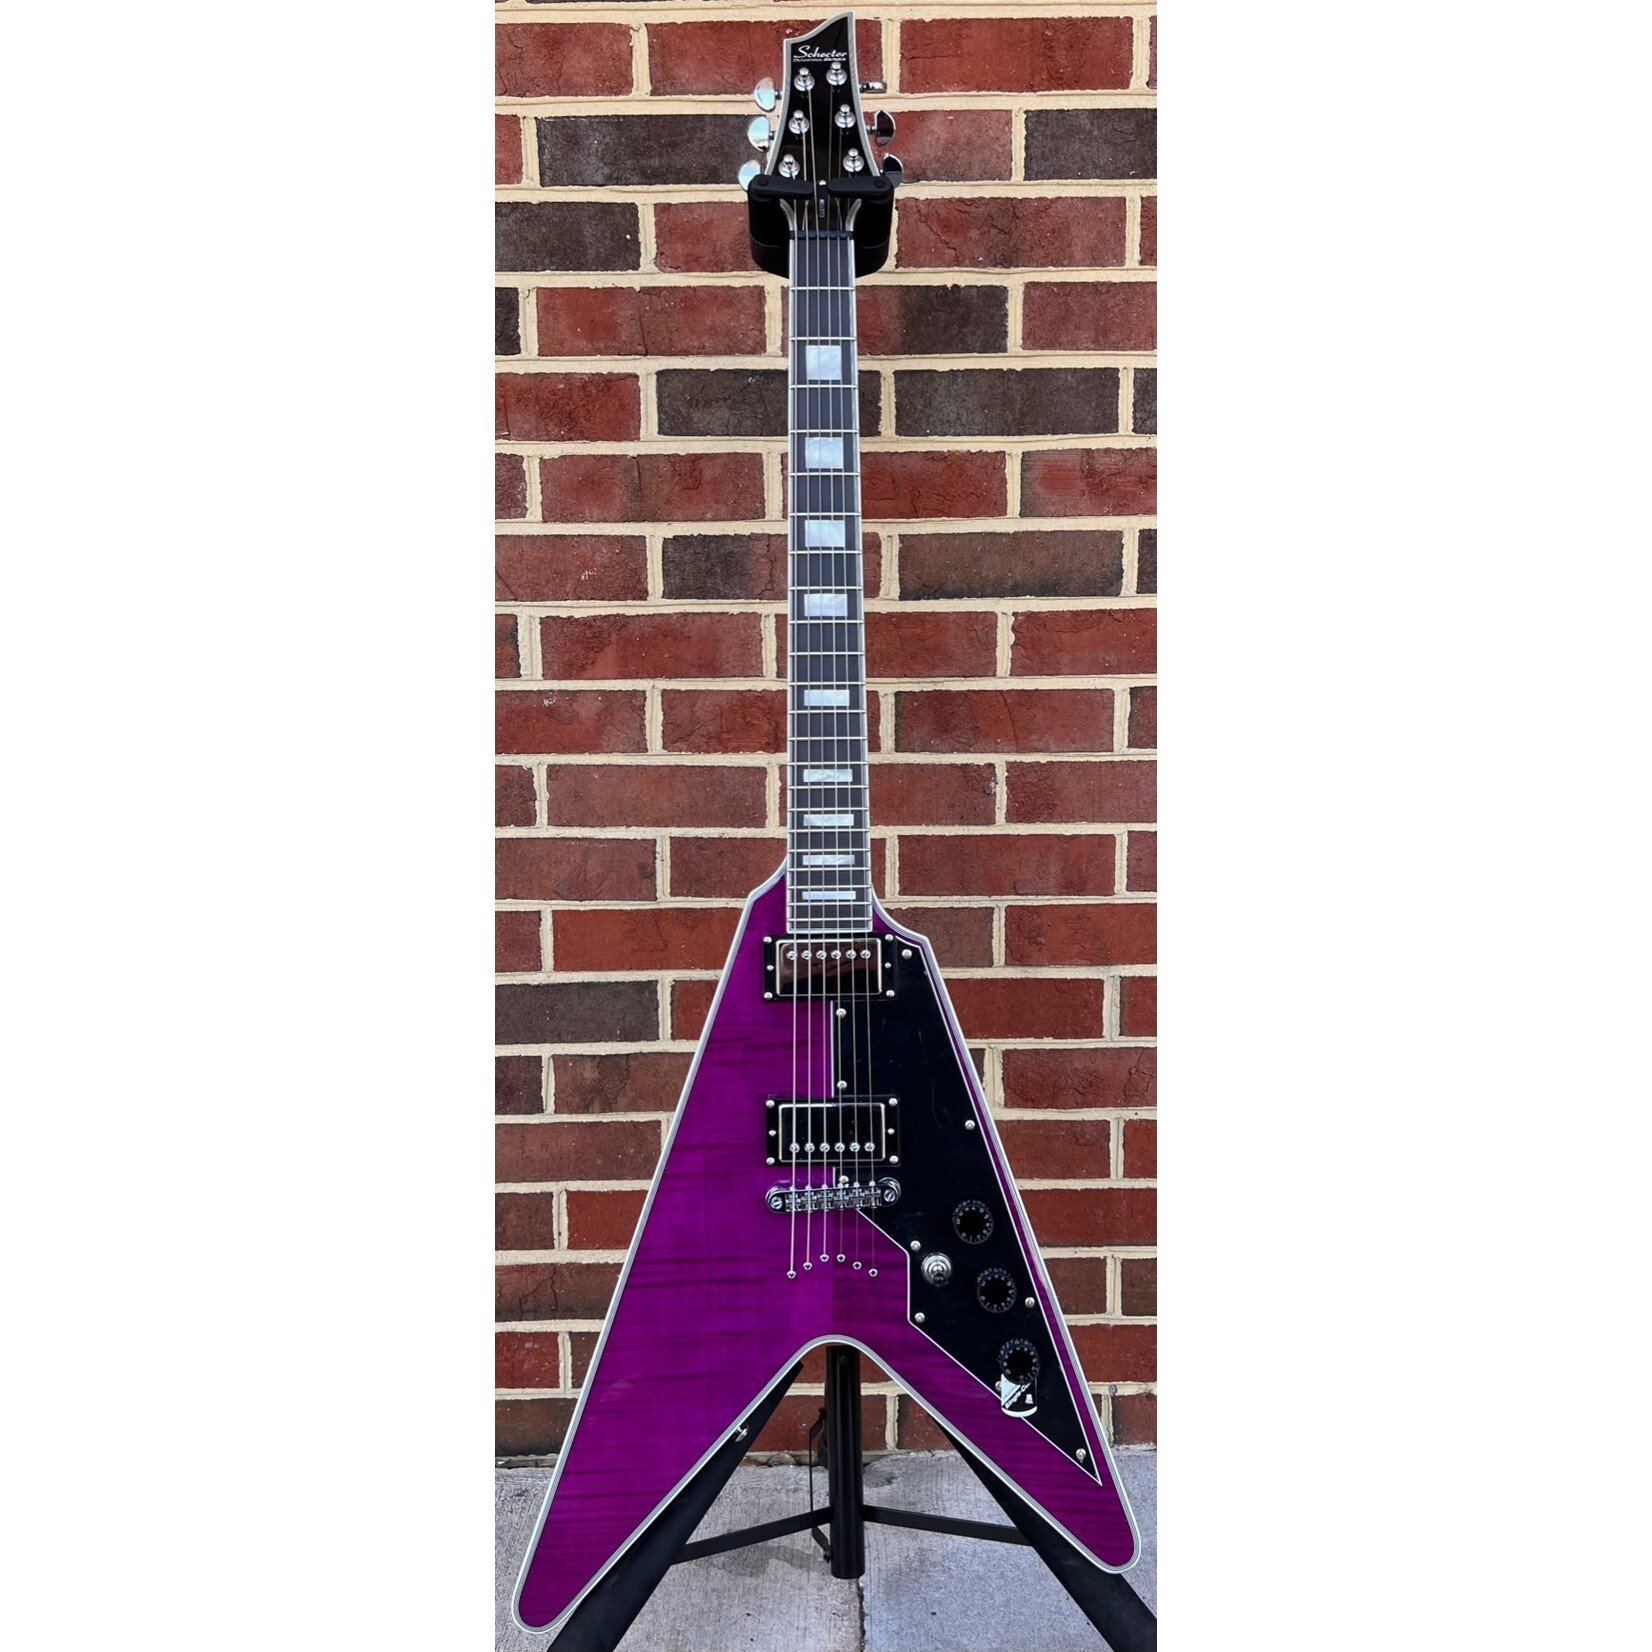 Schecter Guitar Research Schecter V-1 Custom, Trans Purple, Flame Maple Top, Ebony Fretboard, Block Inlays, Locking Tuners, SN# W23020905